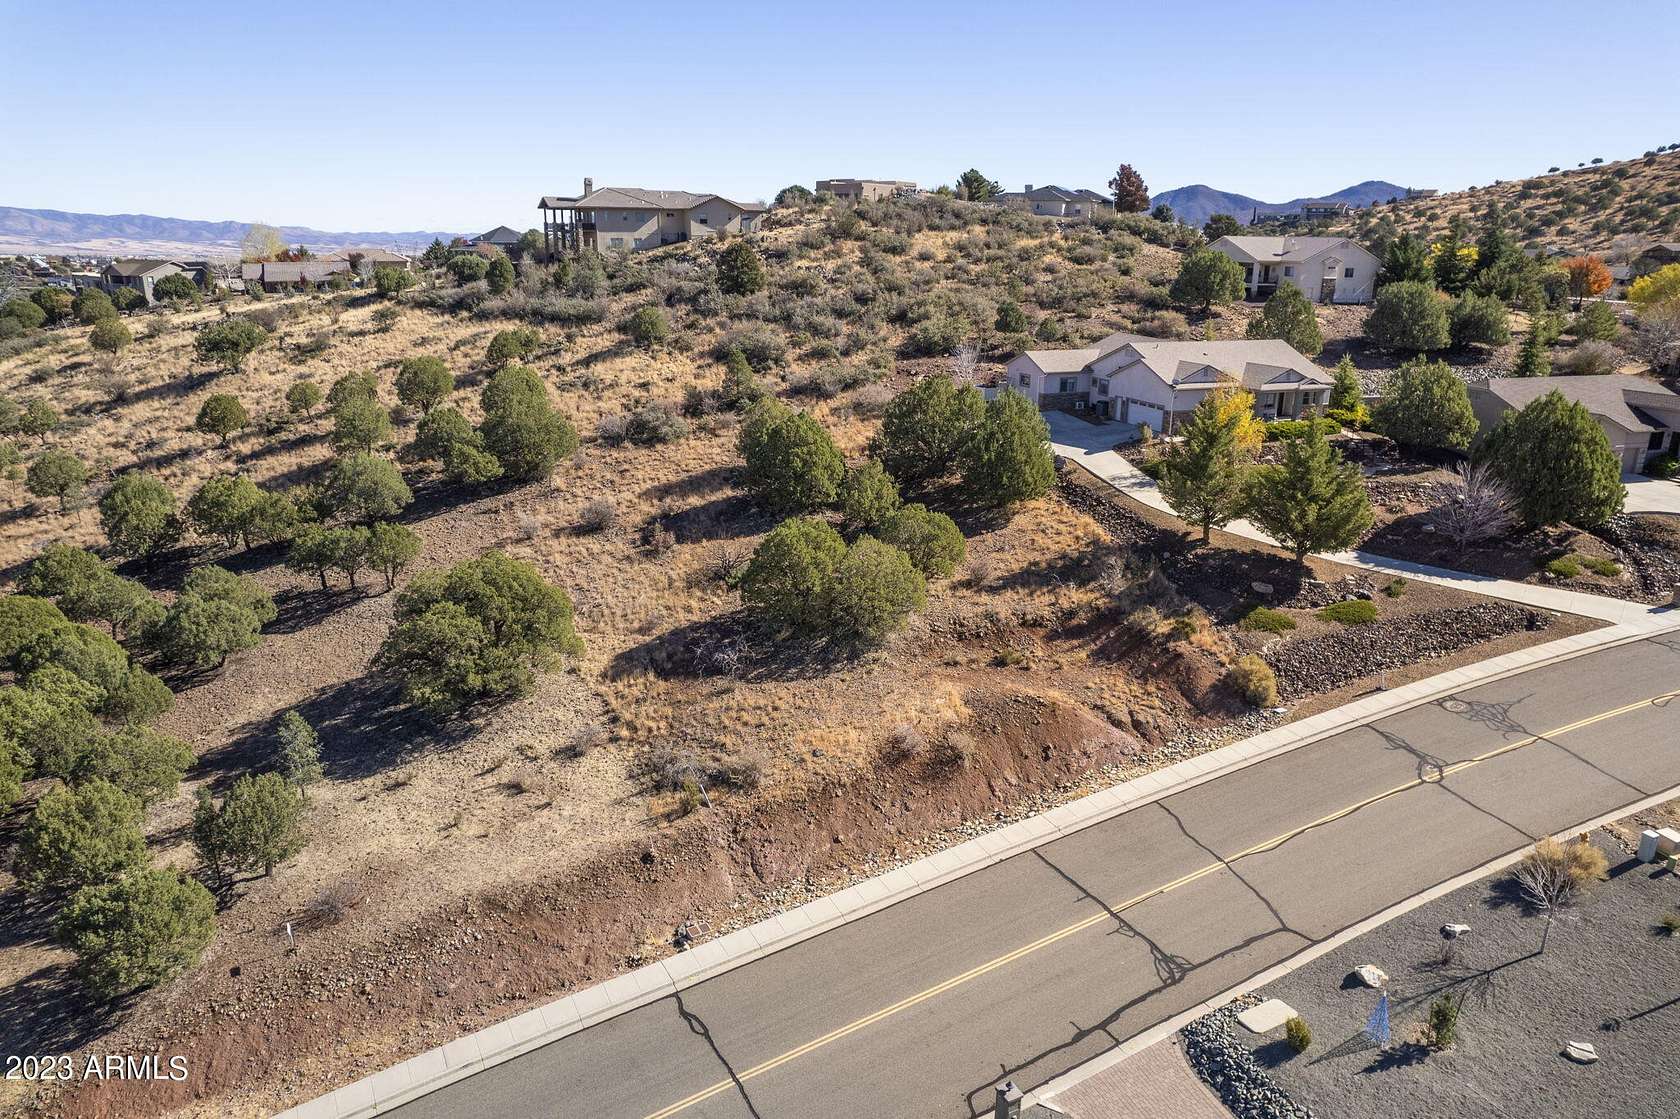 0.47 Acres of Residential Land for Sale in Prescott, Arizona